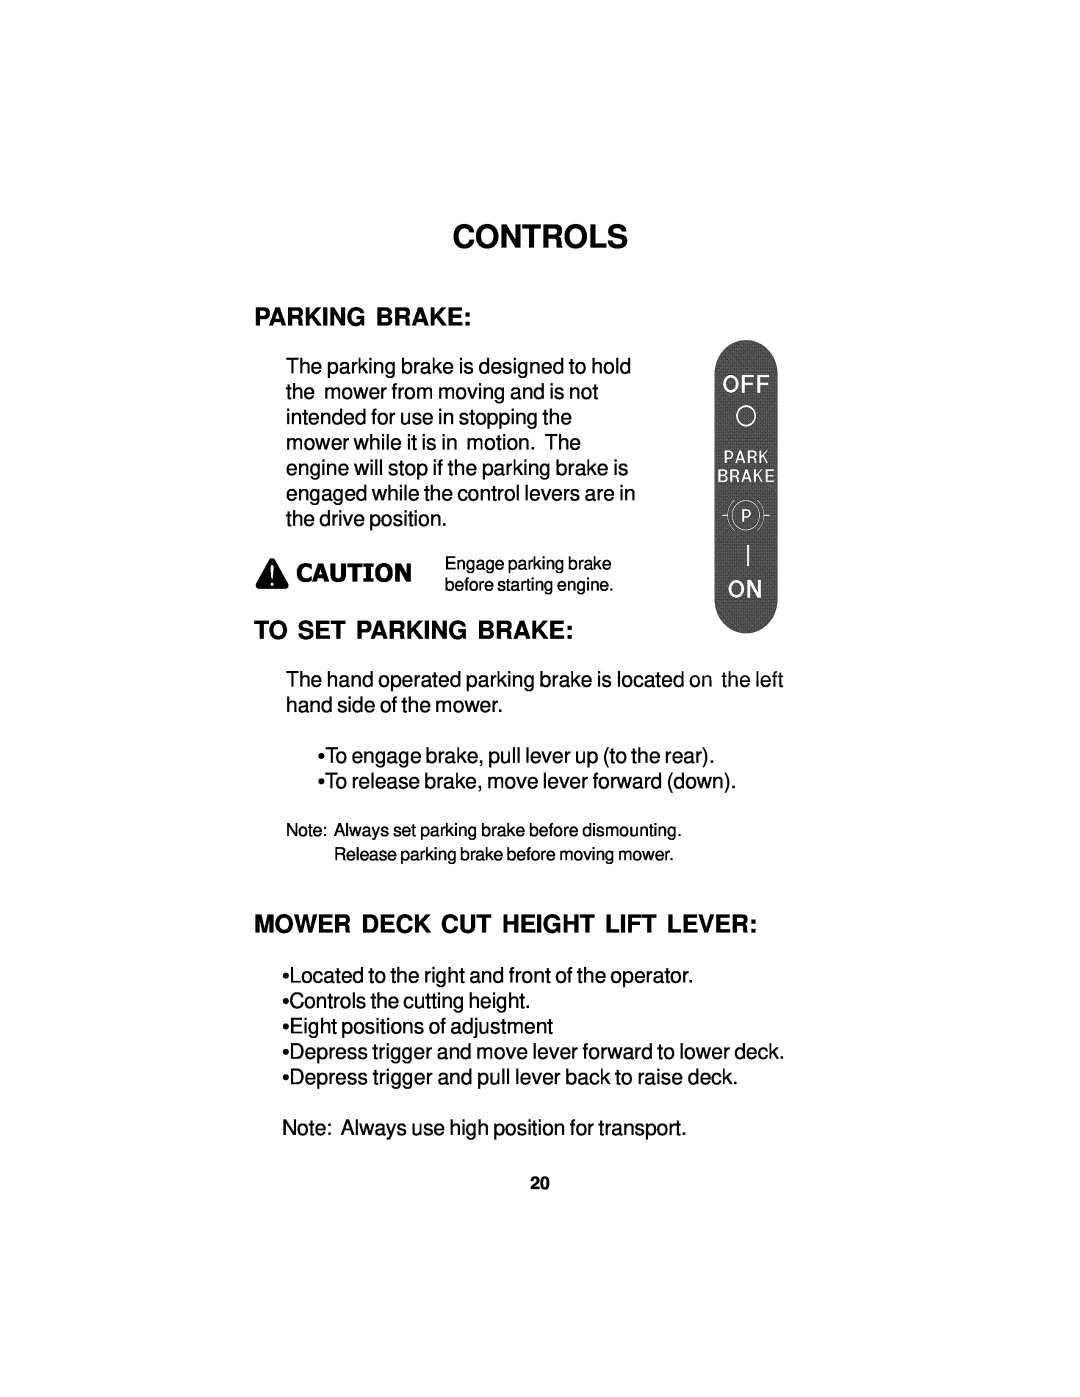 Dixon 18124-0804 manual To Set Parking Brake, Mower Deck Cut Height Lift Lever, Controls 